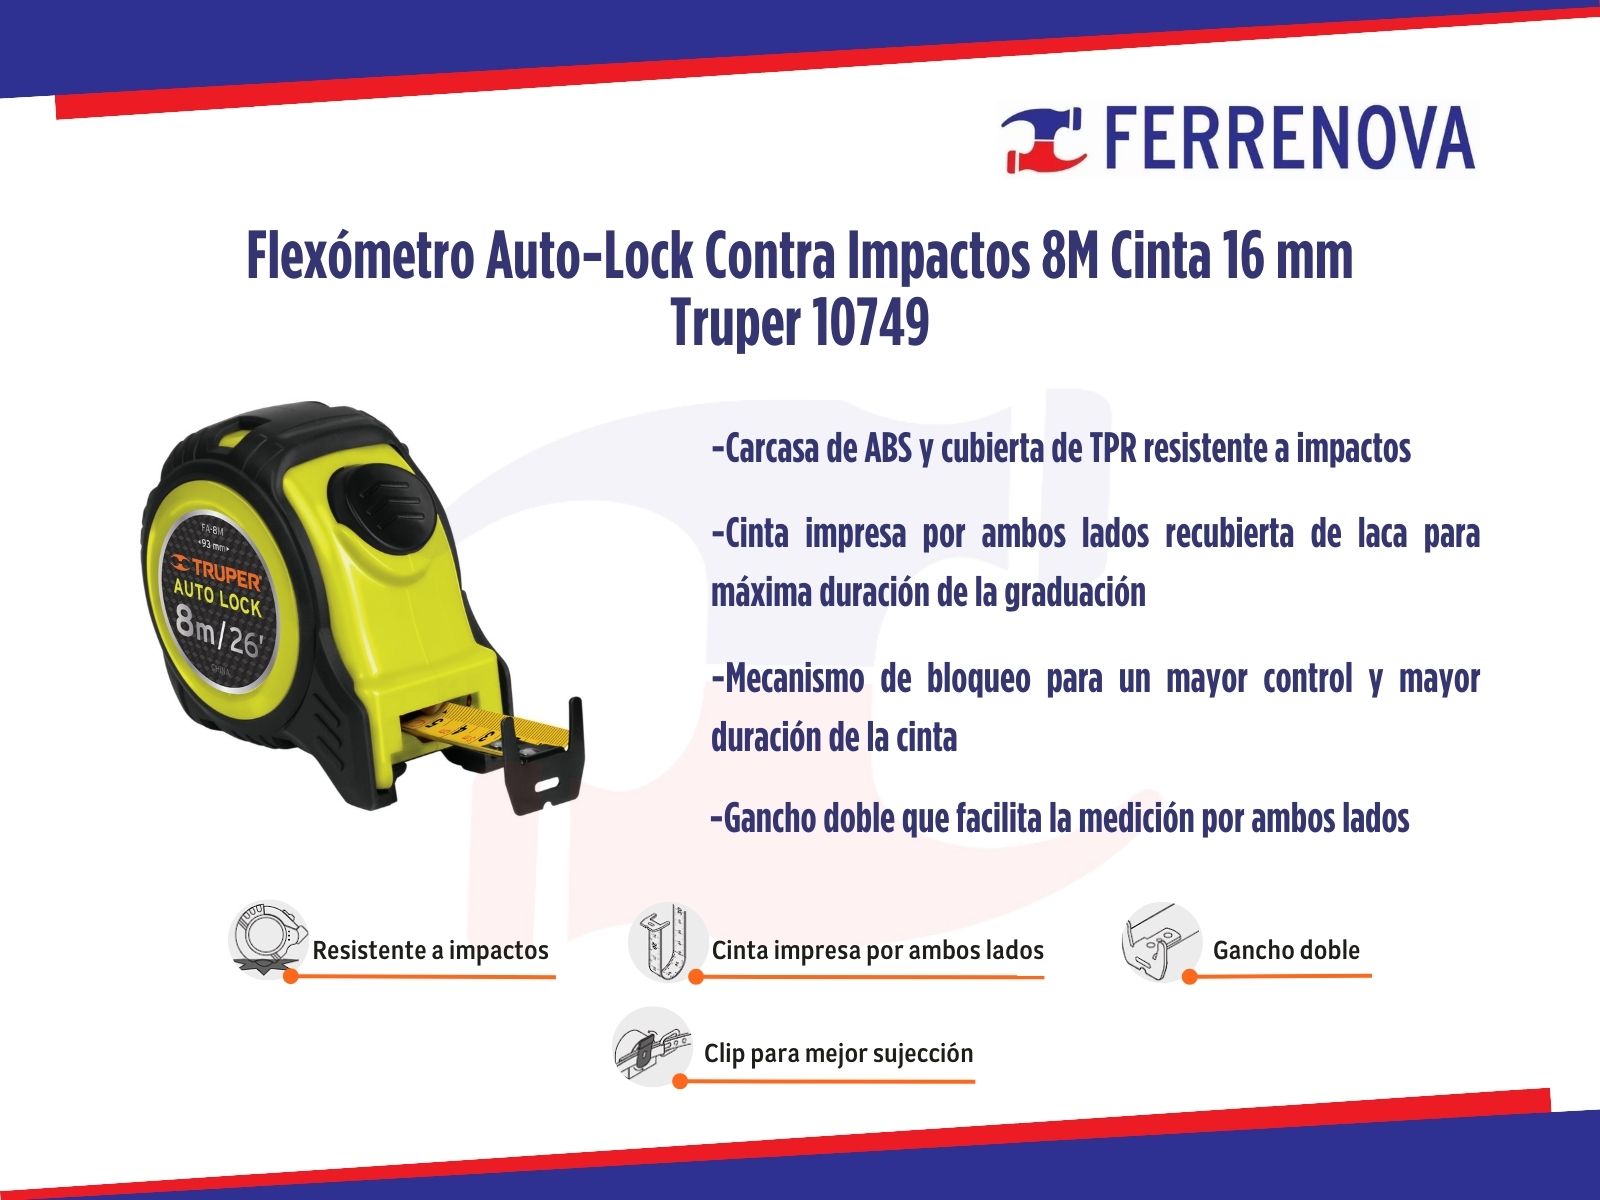 Flexómetro Auto-Lock Contra Impactos 8M Cinta 16 mm Truper 10749